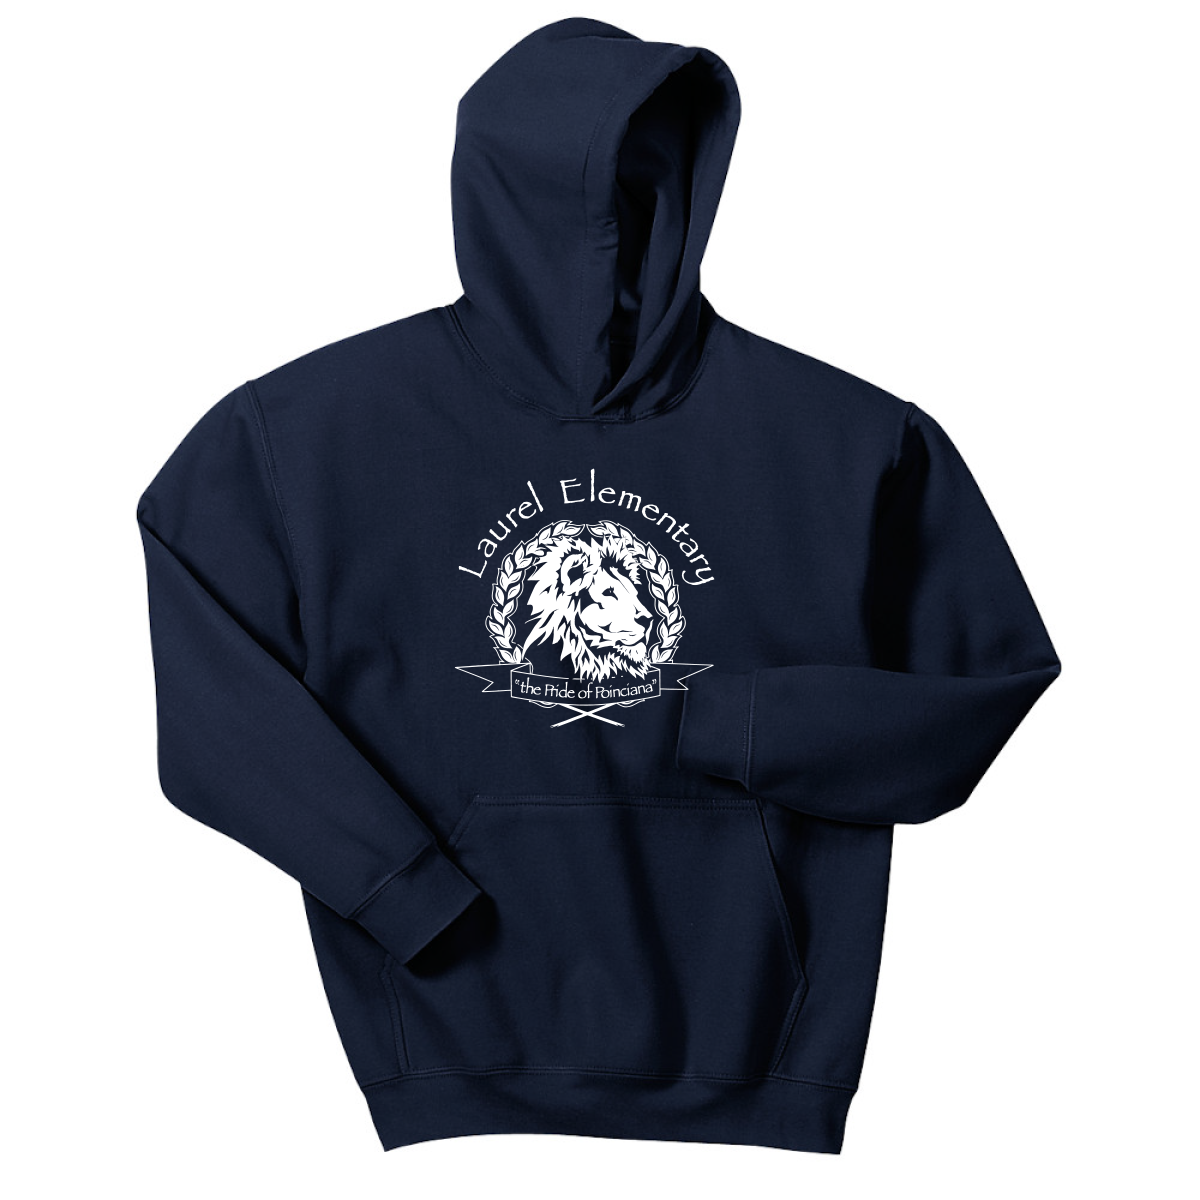 Laurel Elementary Hooded Sweatshirt - (Youth & Adult Sizes) - Navy